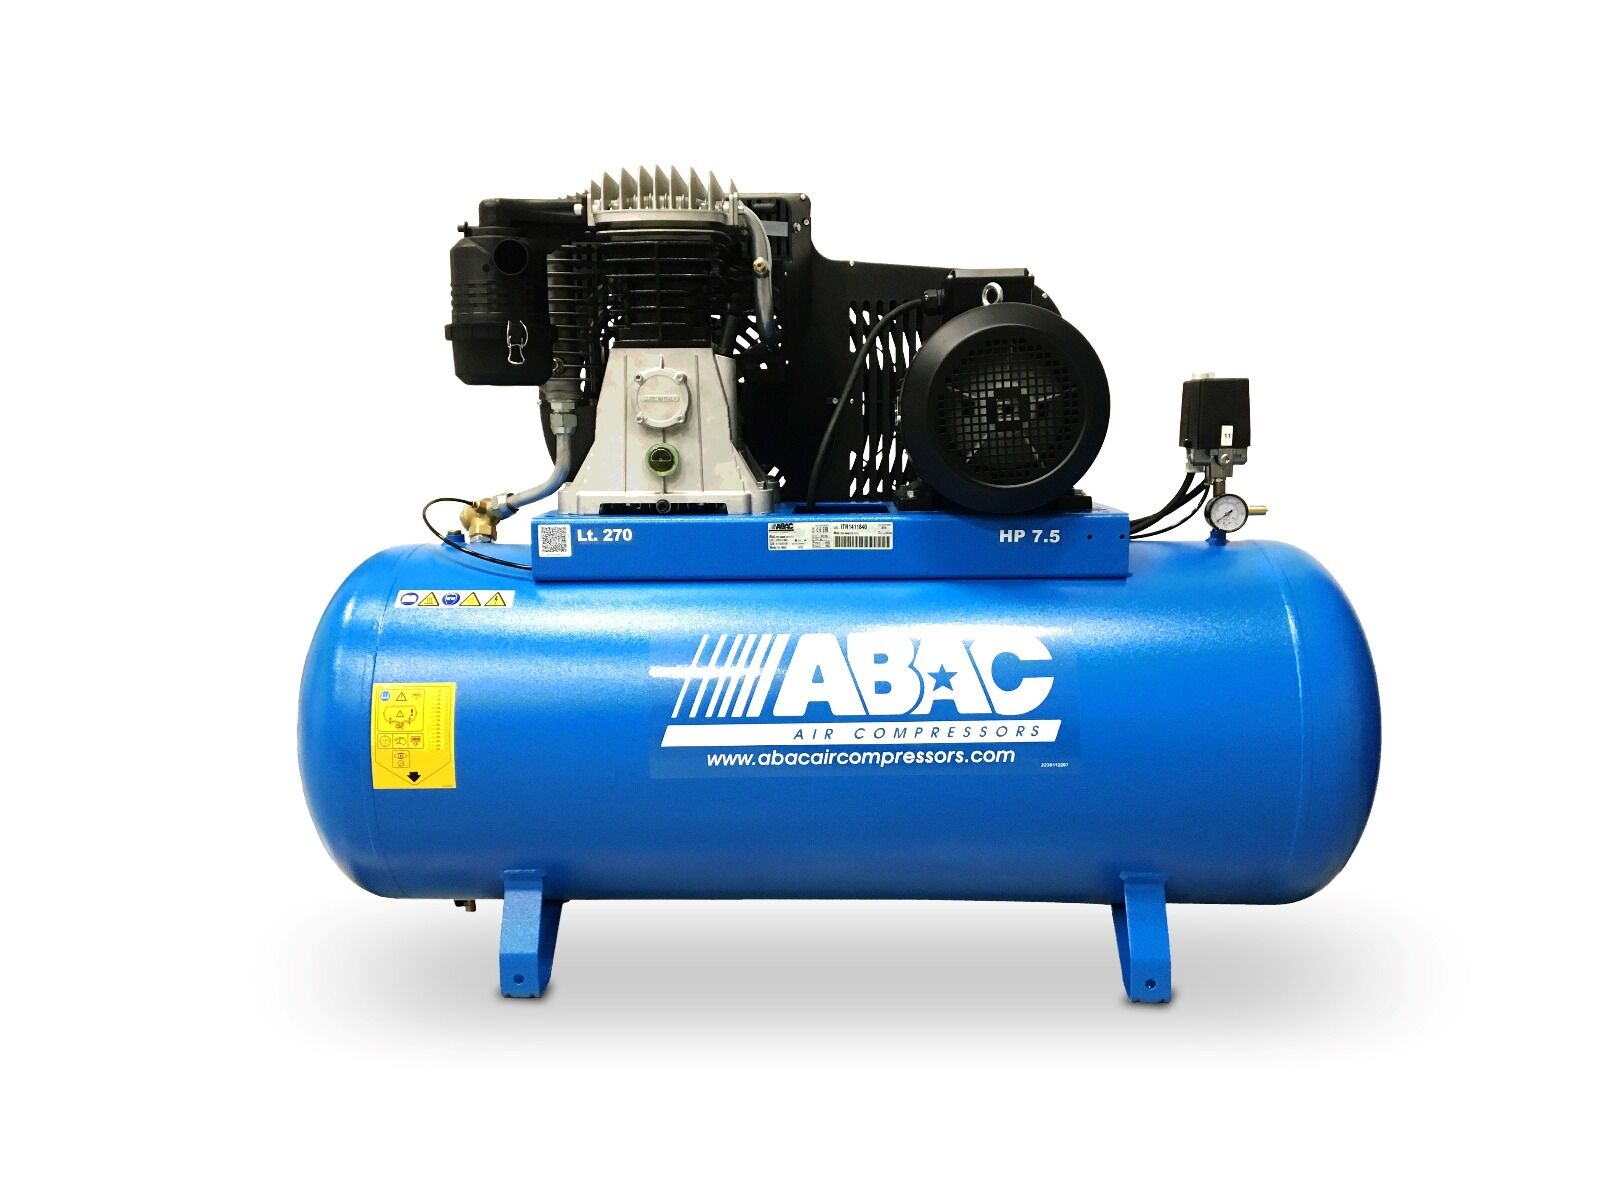 ABAC PRO B6000 270 FT7,5 Compressore 7,5HP 270L (400V)